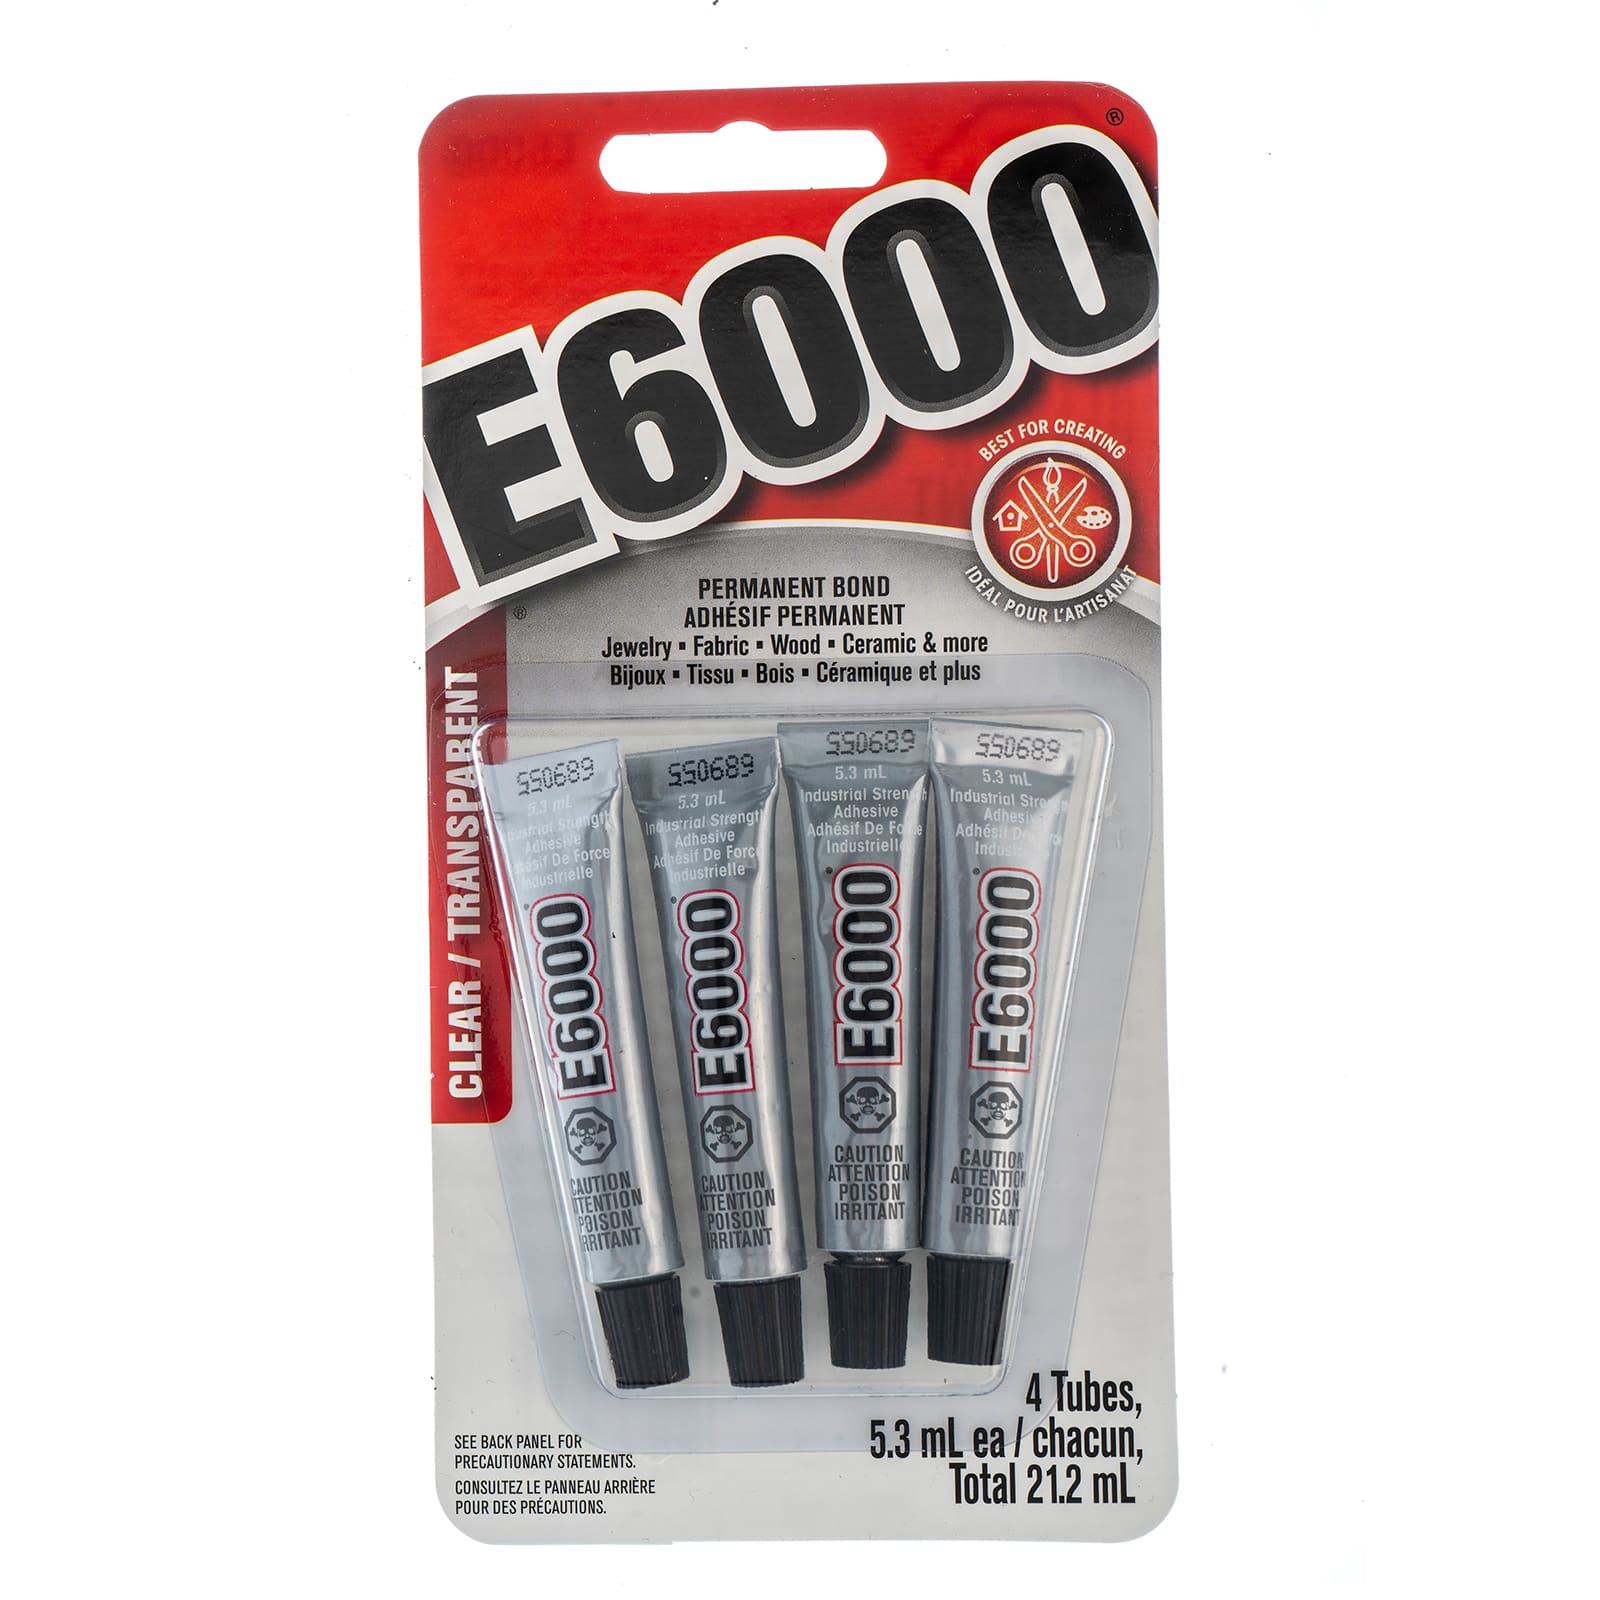 Mini E-6000, Jewelry Glue, Jewelry Supplies, jewelry making supplies,  adhesive, multi purpose glues, clear glue